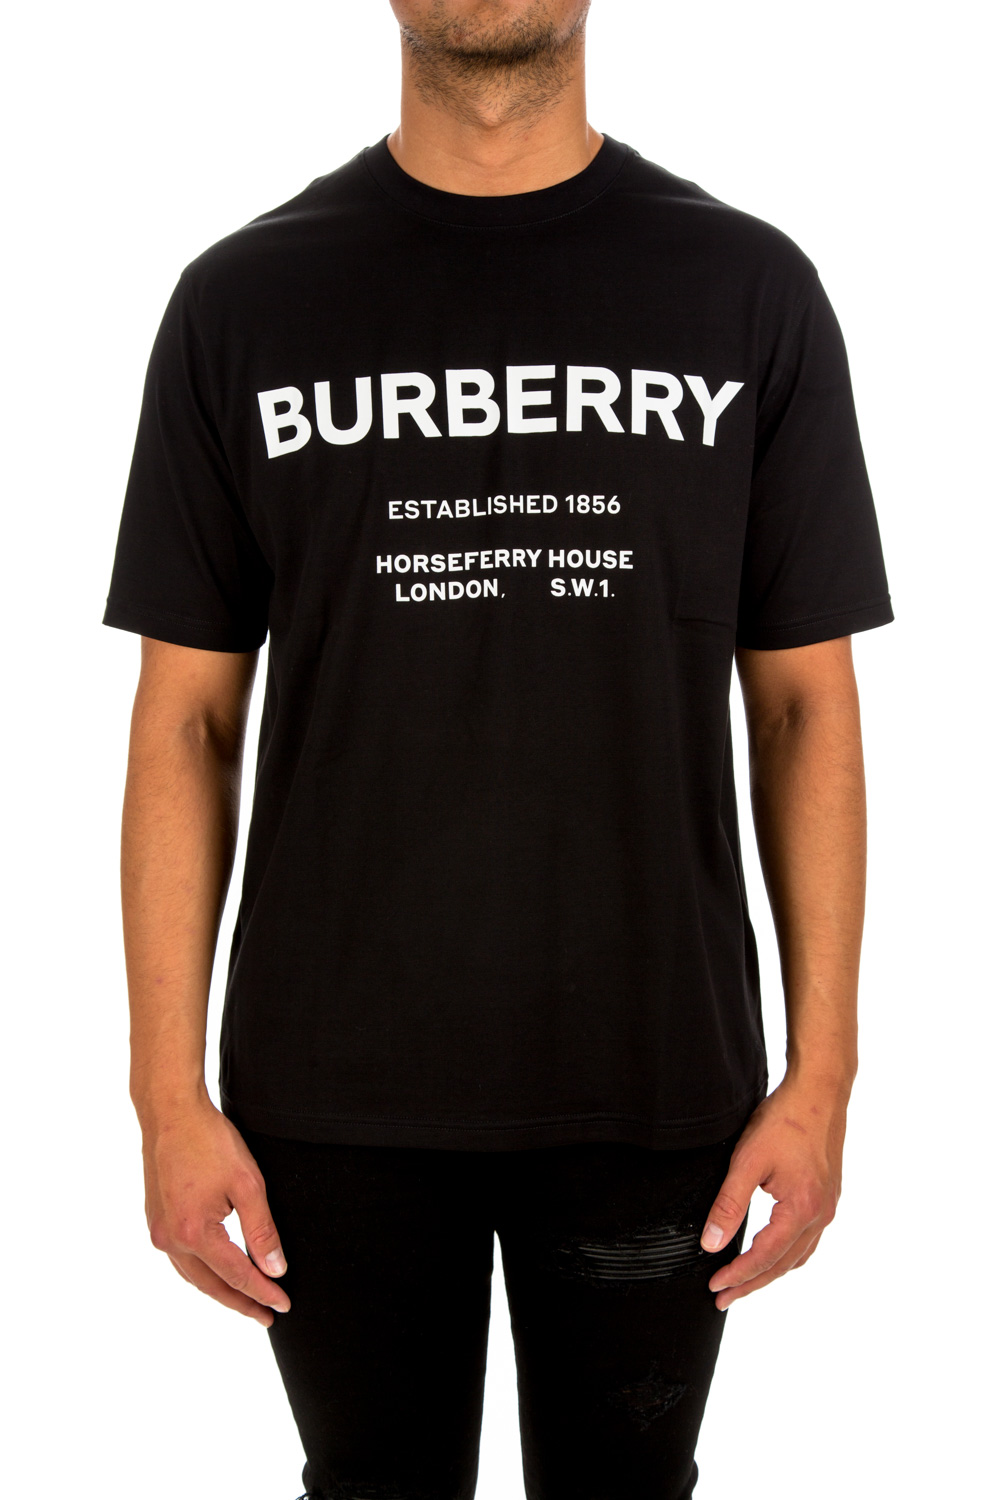 Burberry Murs Jerseywear | Credomen